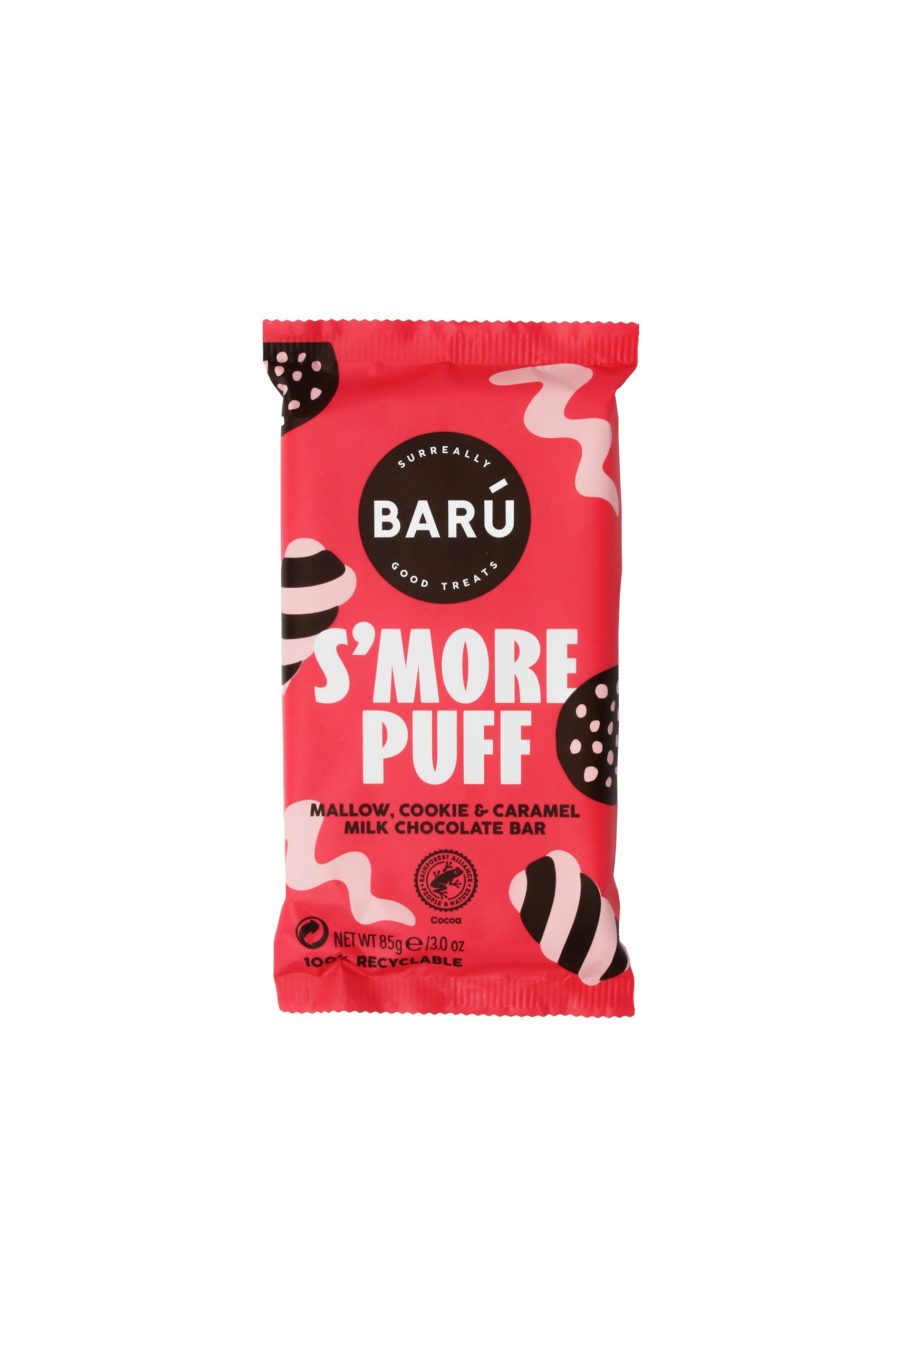 Baru S'More Puff Milk Chocolate Bar with Mallow, Cookie & Caramel